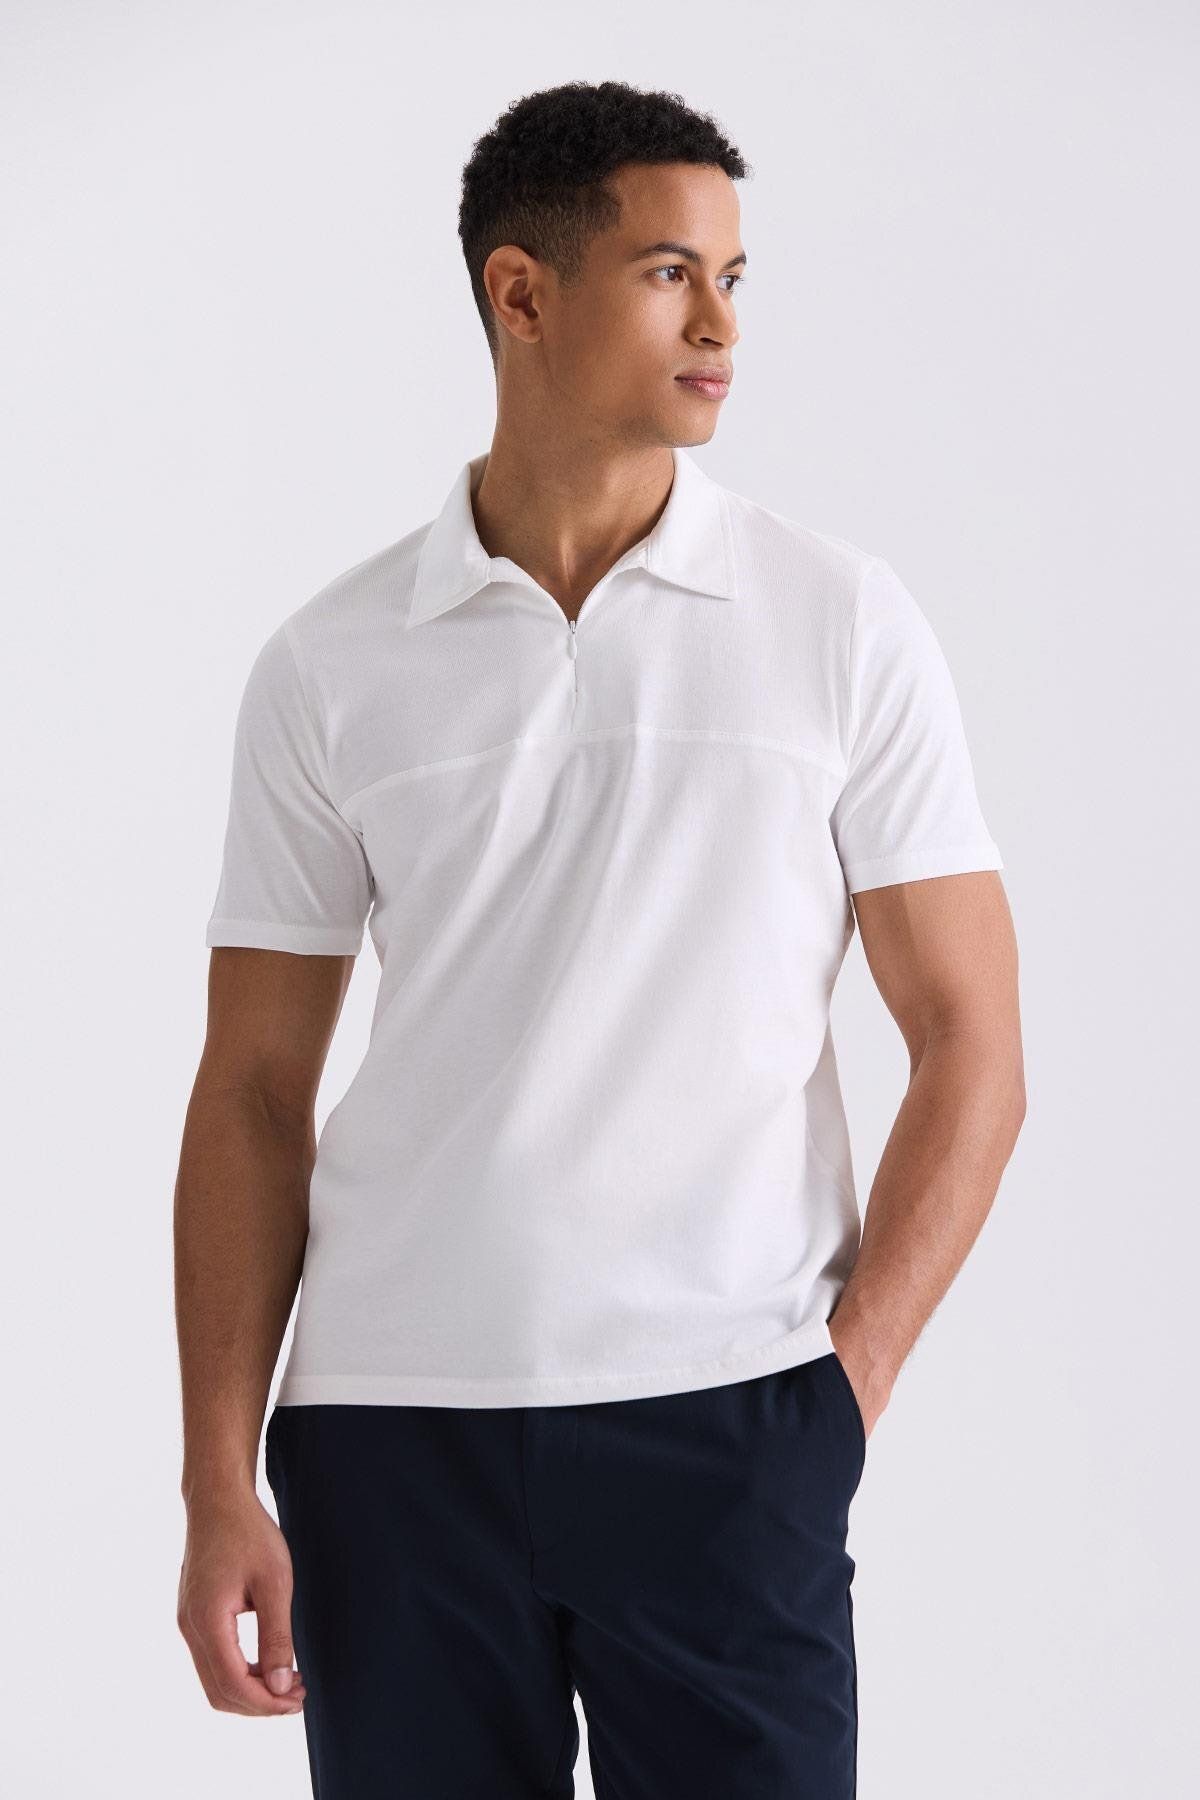 Jakamen Beyaz Slim Fit Fermuarlı Polo Yaka T-Shirt